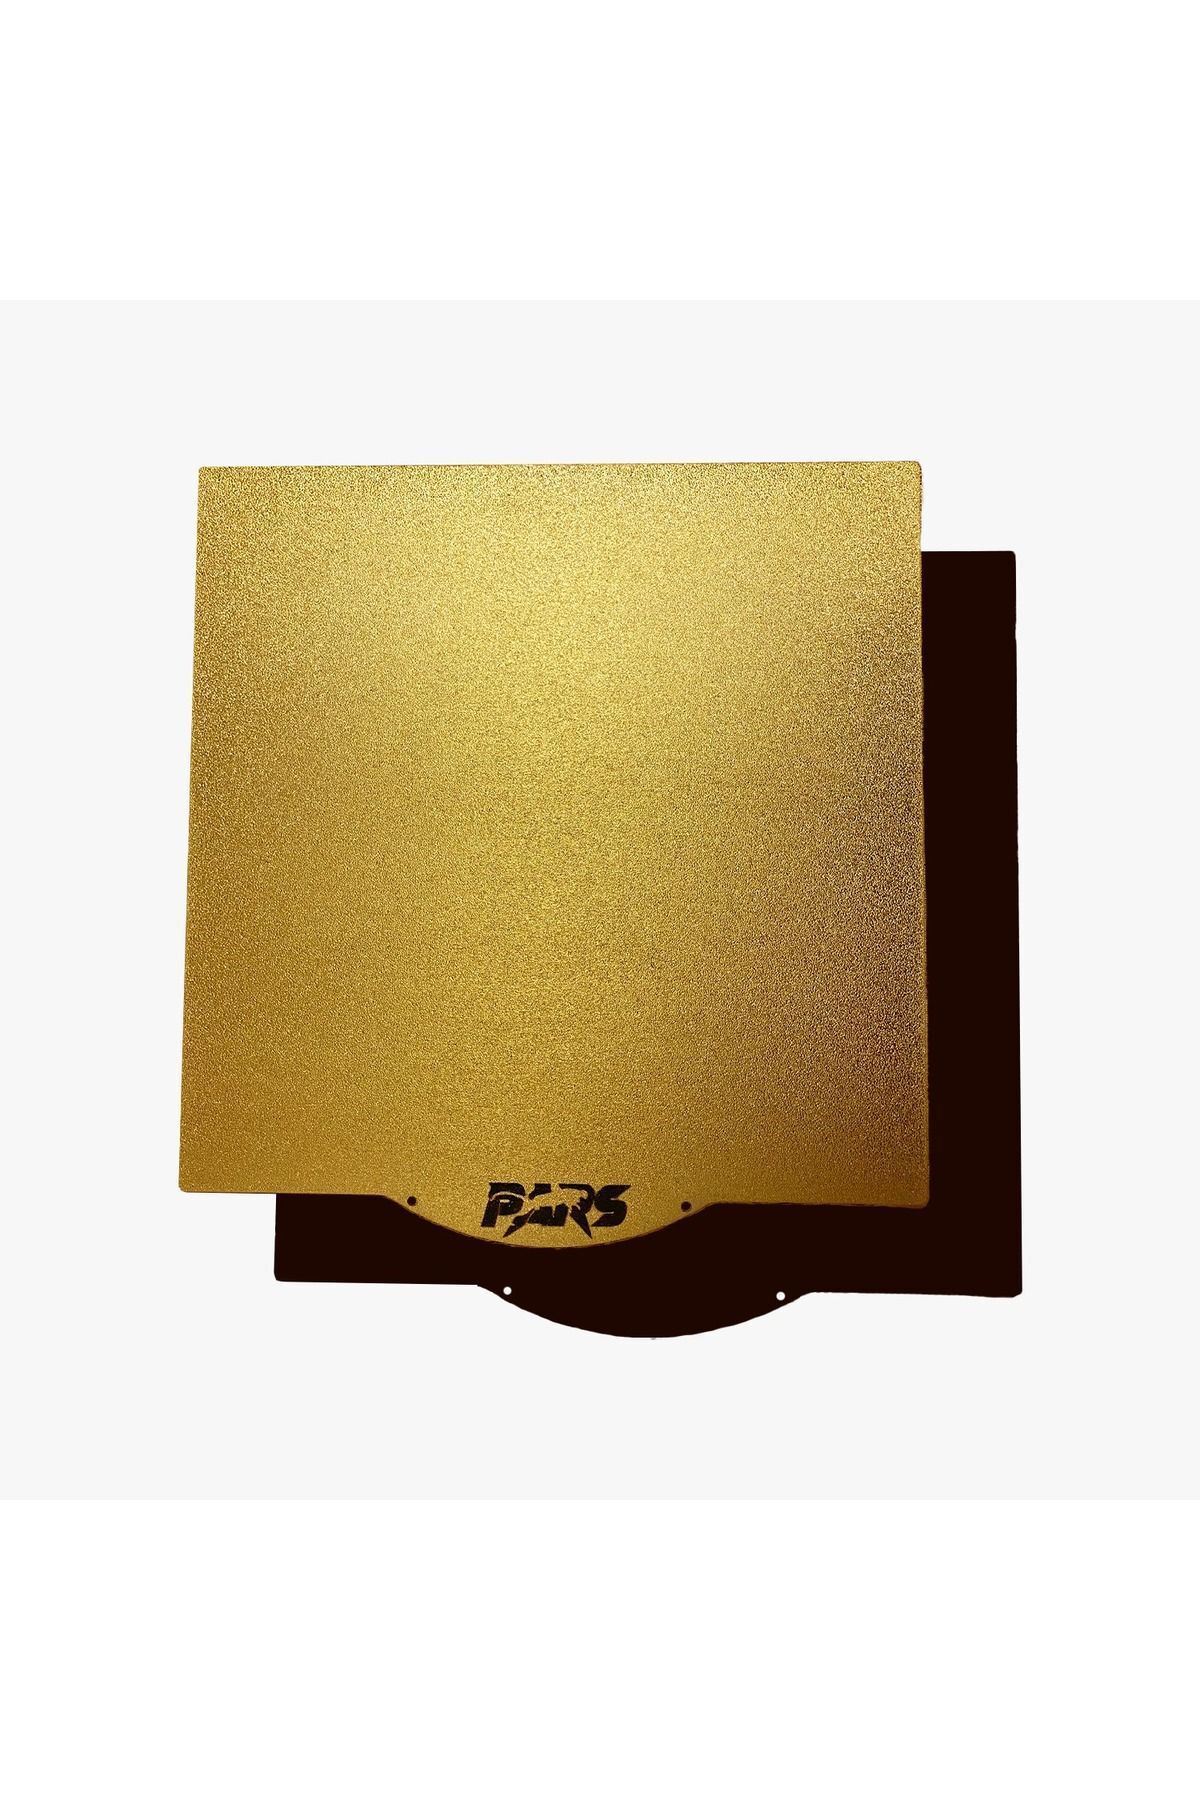 Pars 377x370 MM Pars Gold Pei Kaplı Özel Yay Çeliği Tabla Magnetli